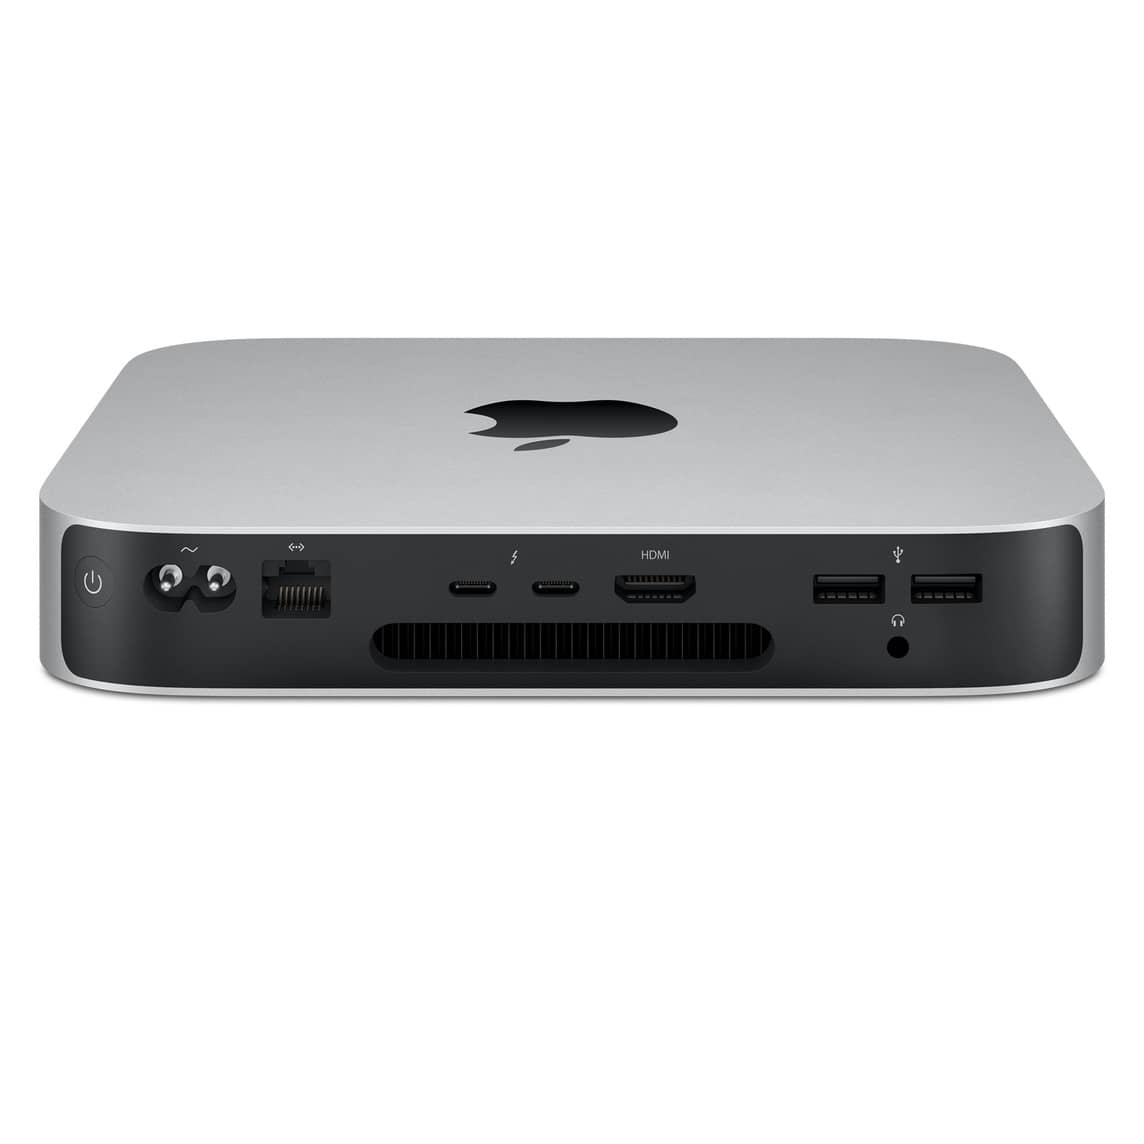 Apple Mac mini M1 2020 Specifications